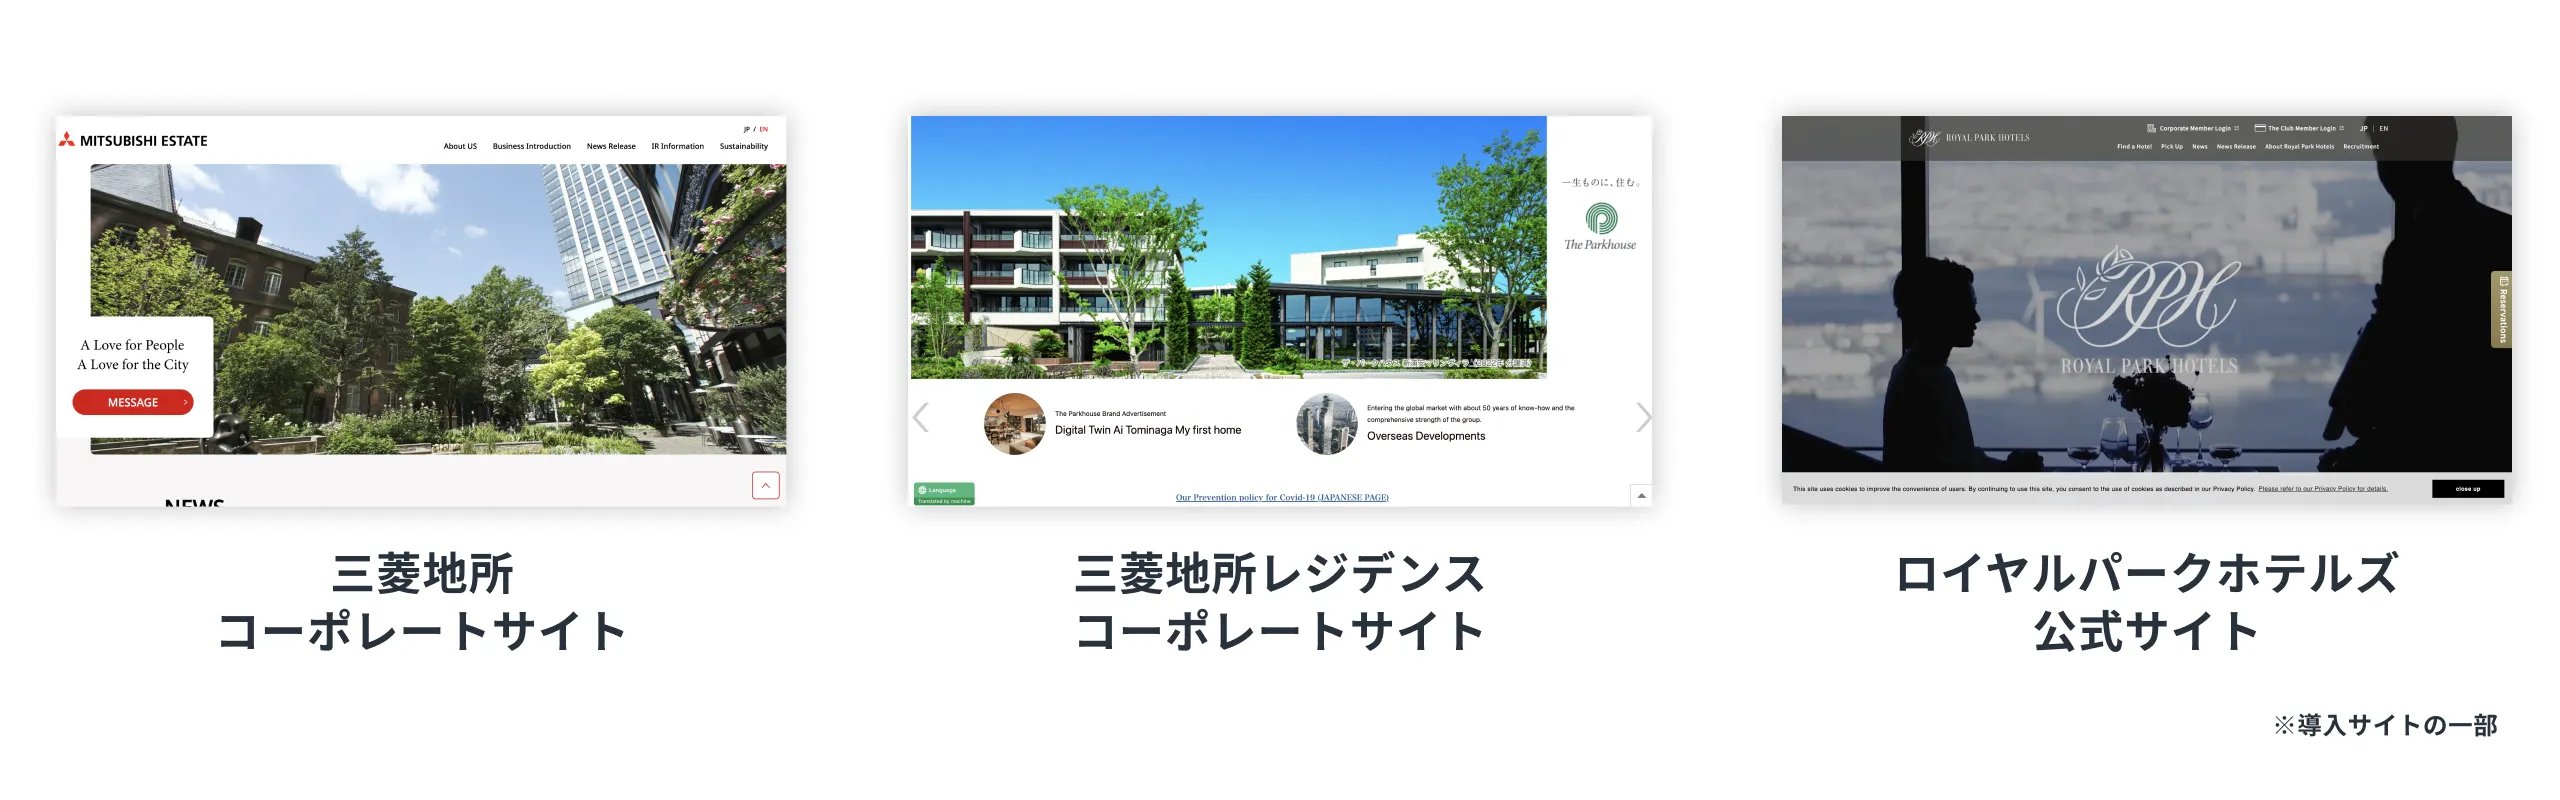 mitsubishi-estate_image